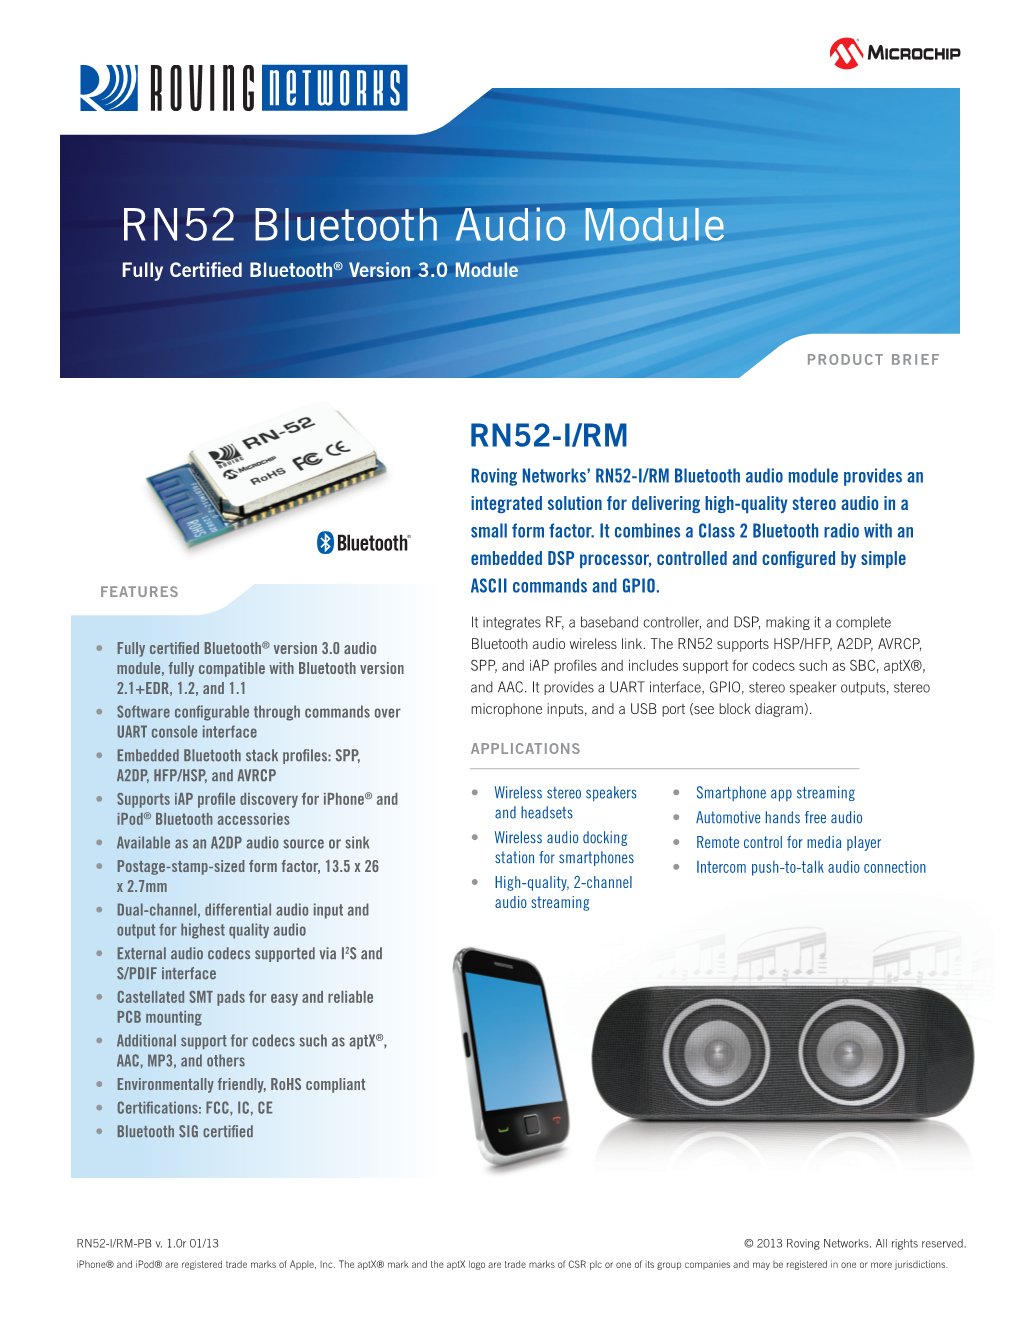 RN52 Bluetooth Audio Module Fully Certified Bluetooth® Version 3.0 Module